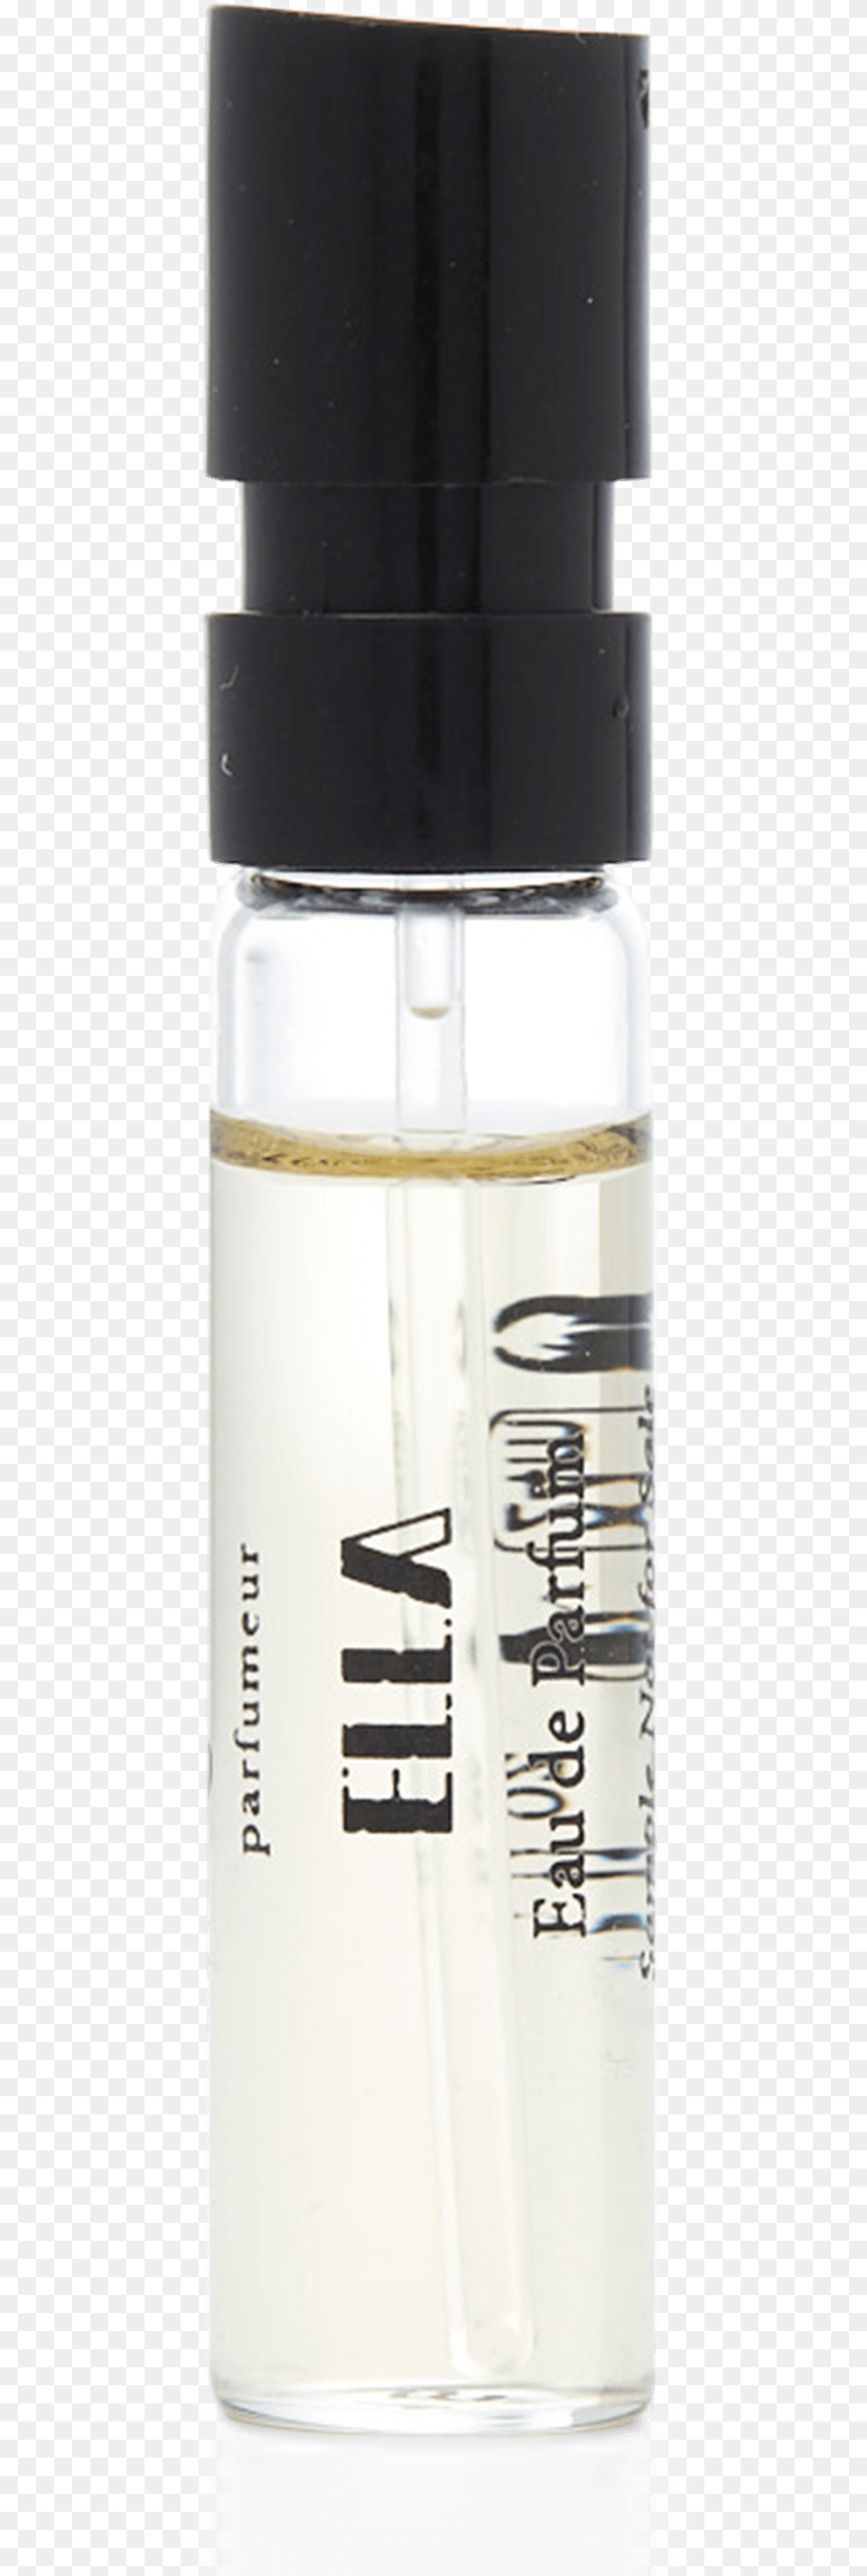 Item Primary Perfume, Bottle, Cosmetics Png Image